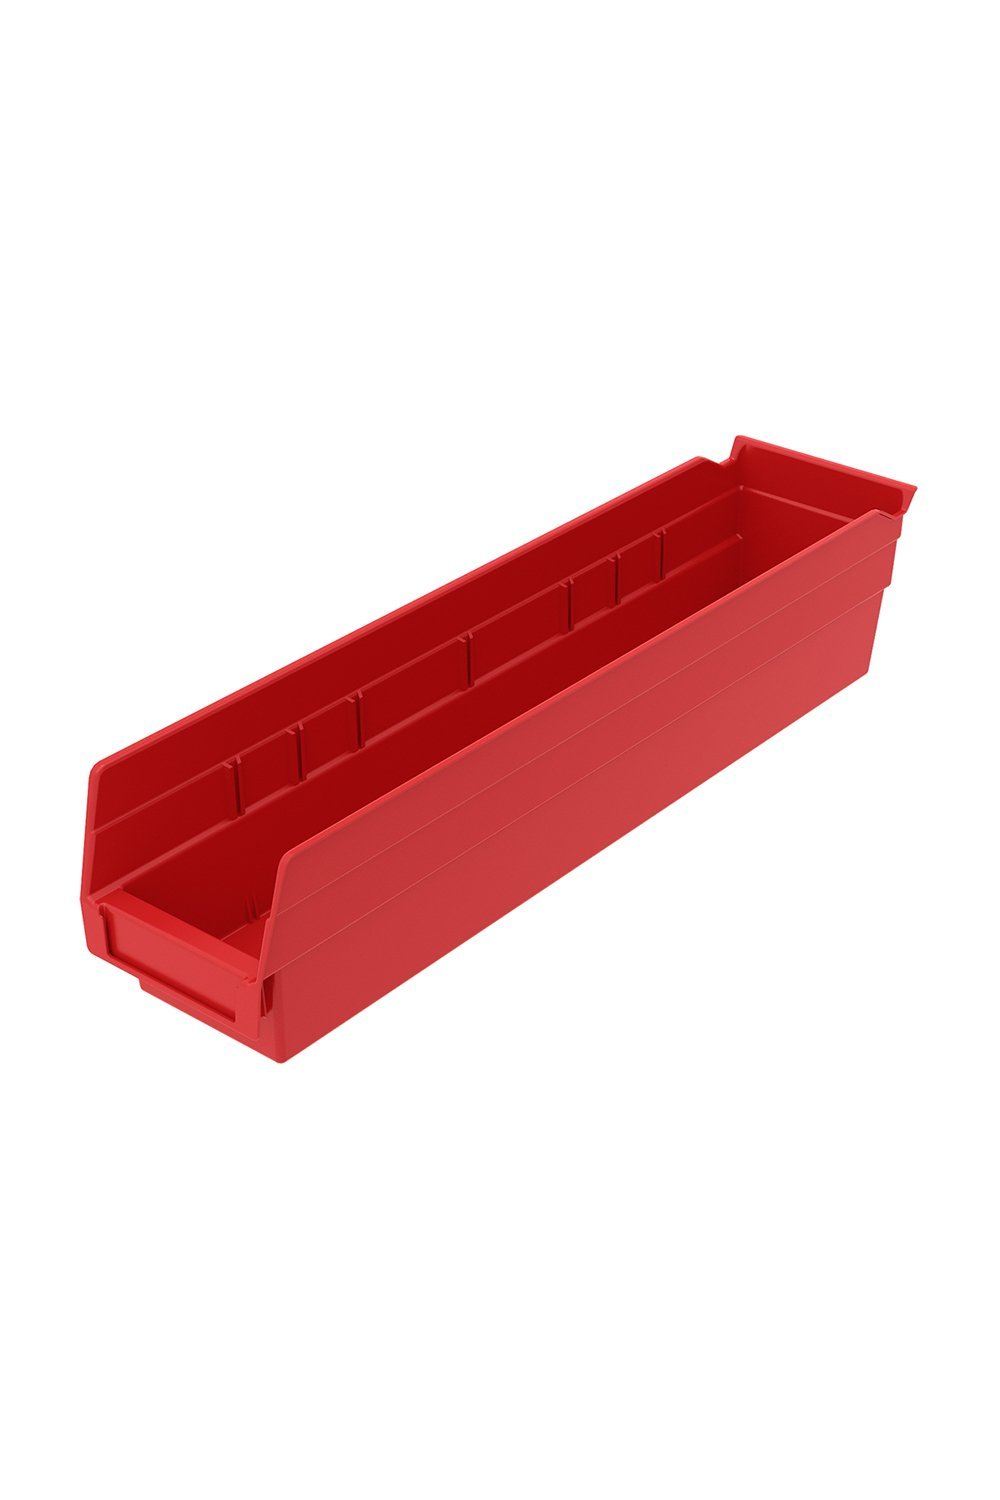 Shelf Bin for 18"D Shelves Bins & Containers Acart 